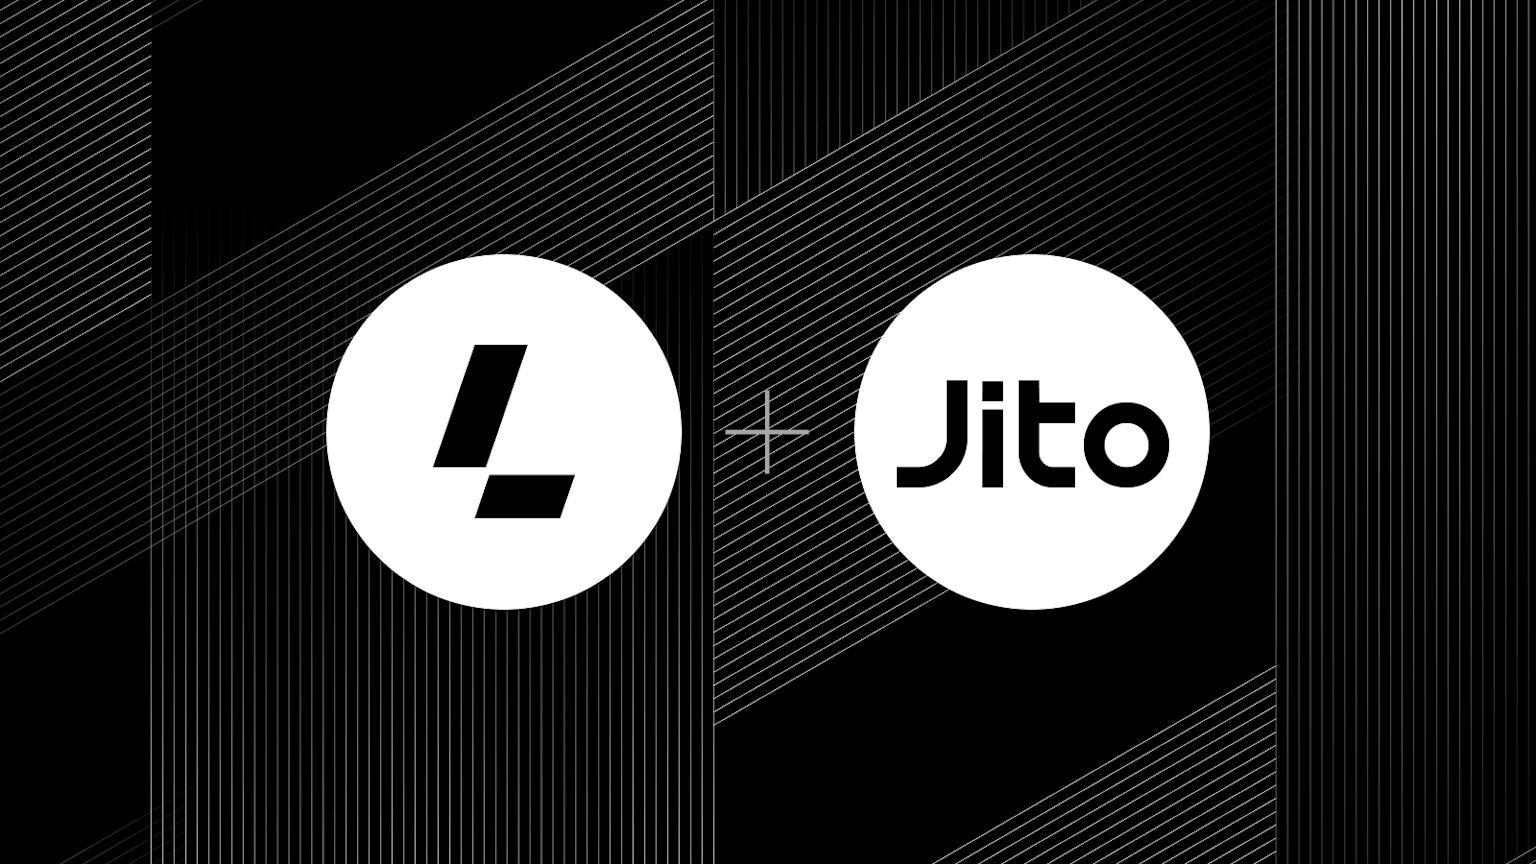 Latitude.sh and Jito Labs partnership announcement